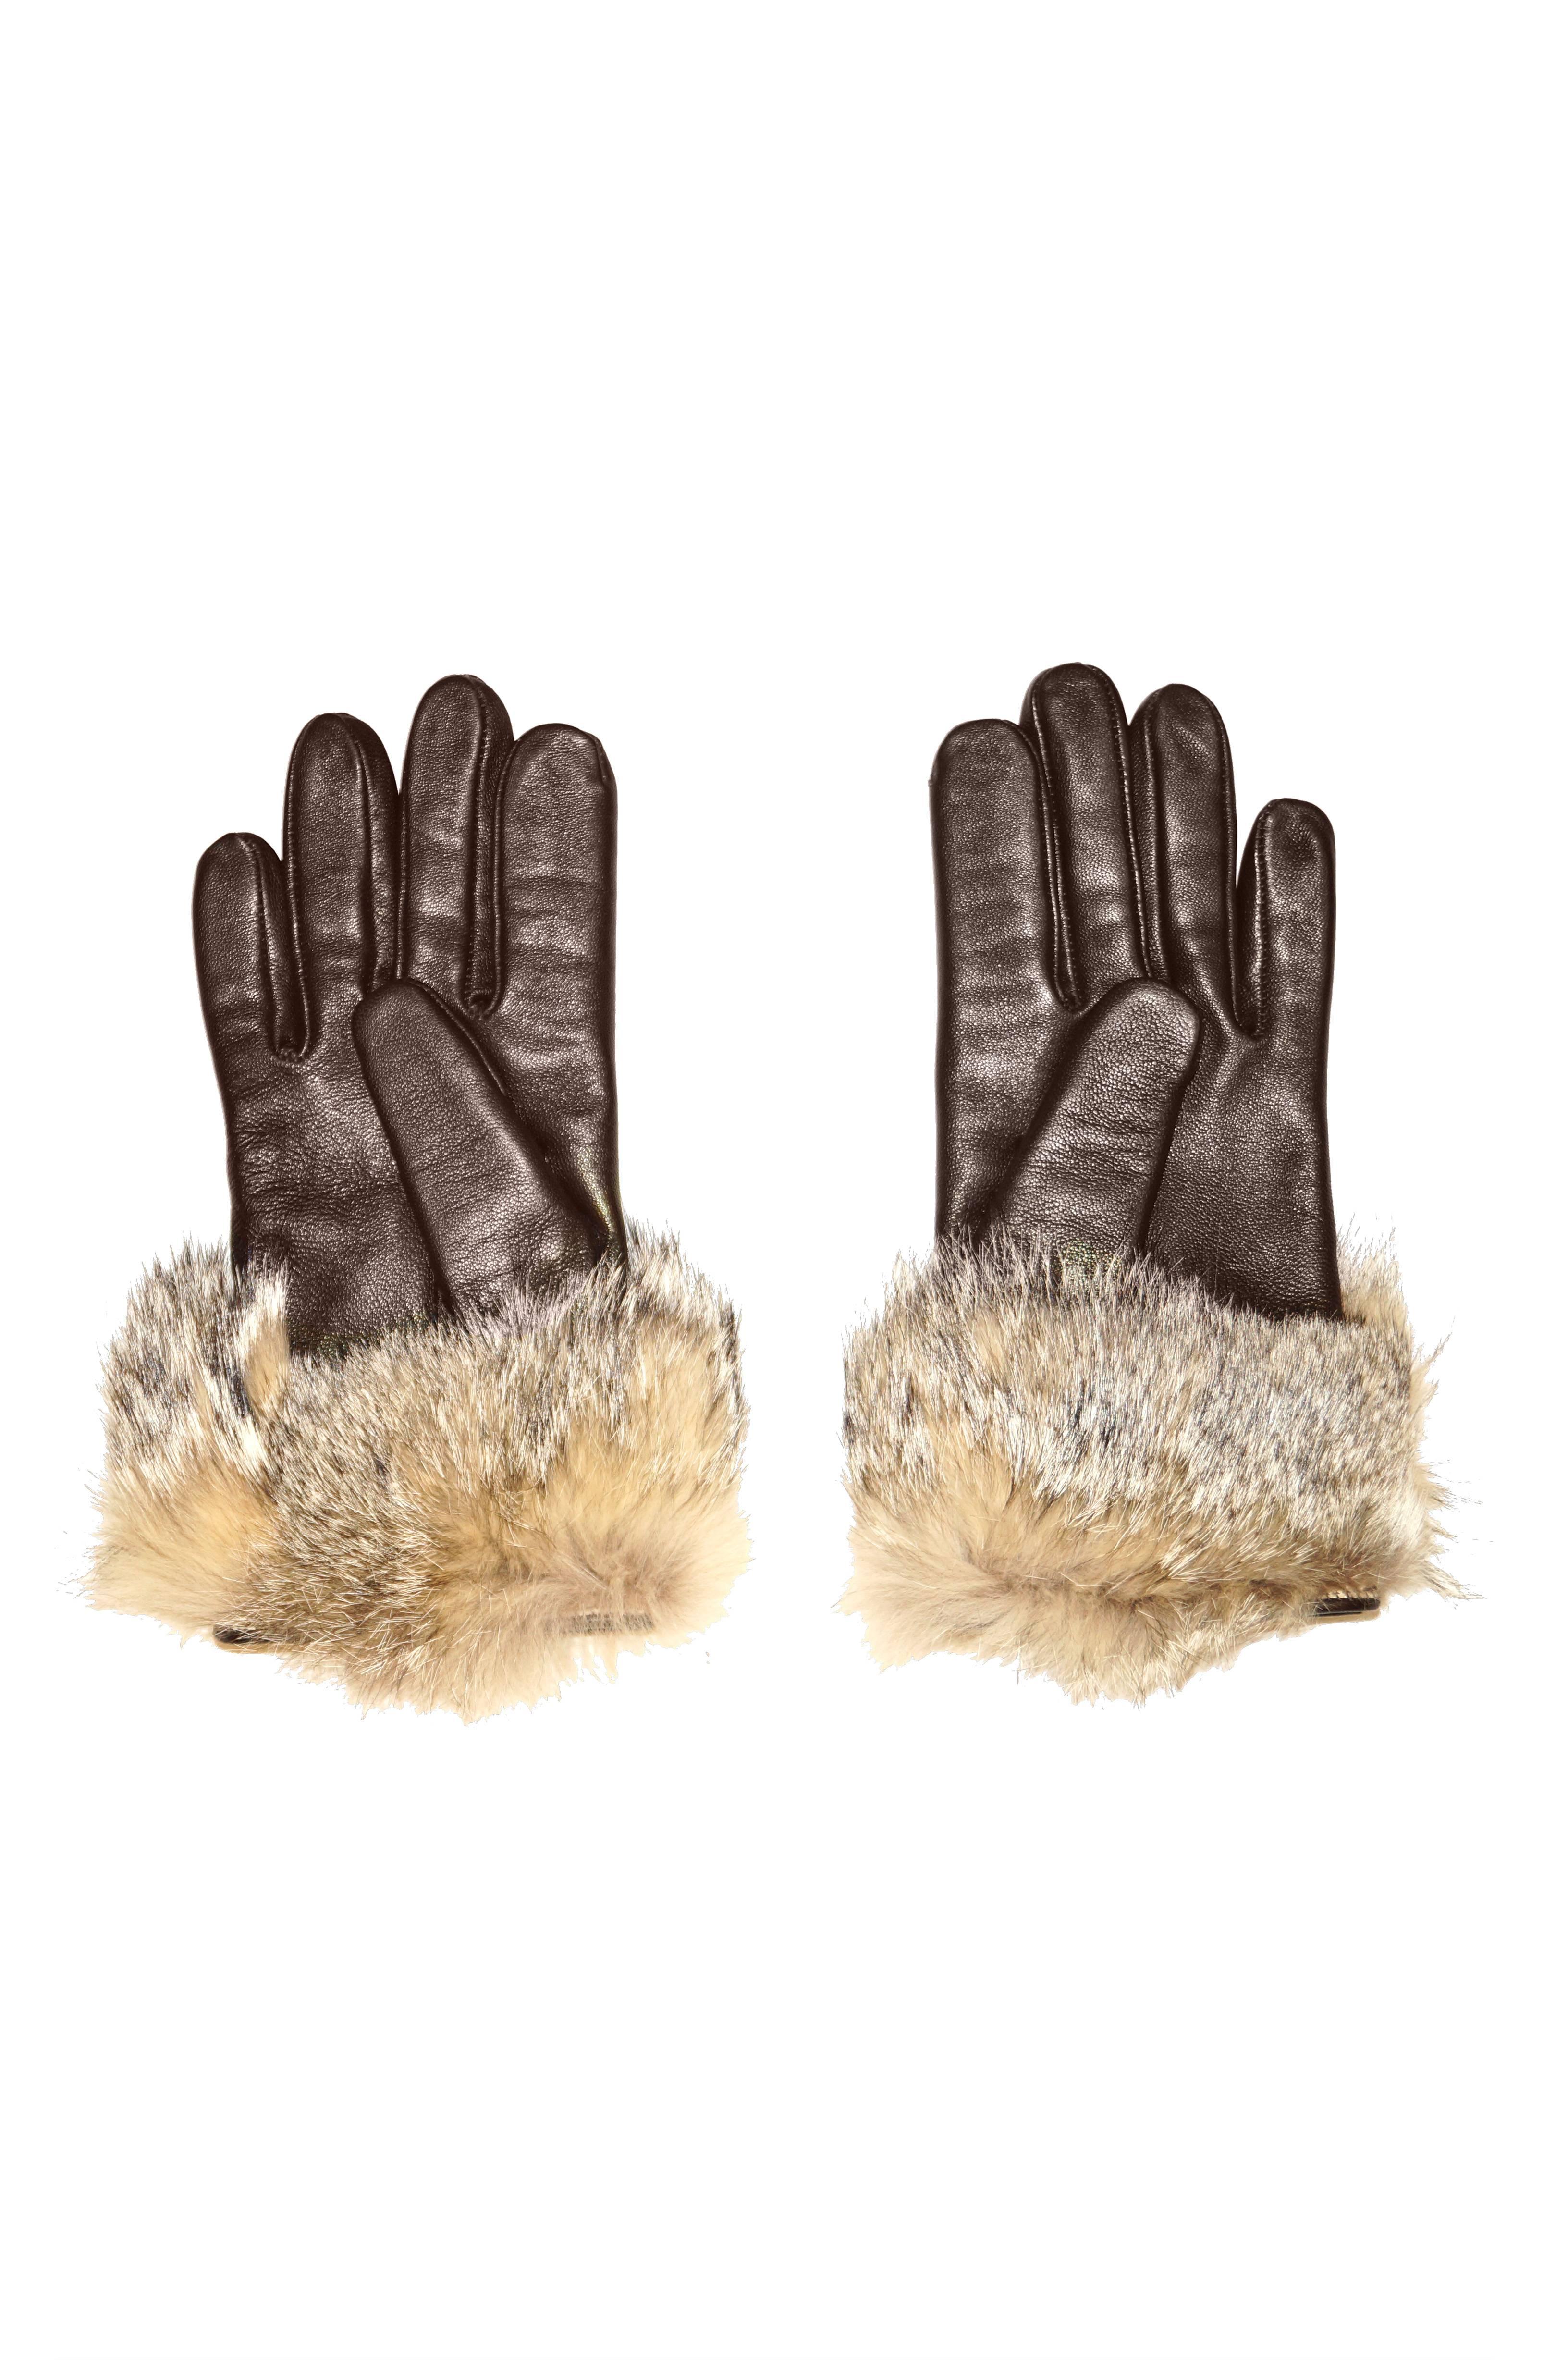 Beige Vintage Italian Brown Leather Gloves with Fur Cuffs